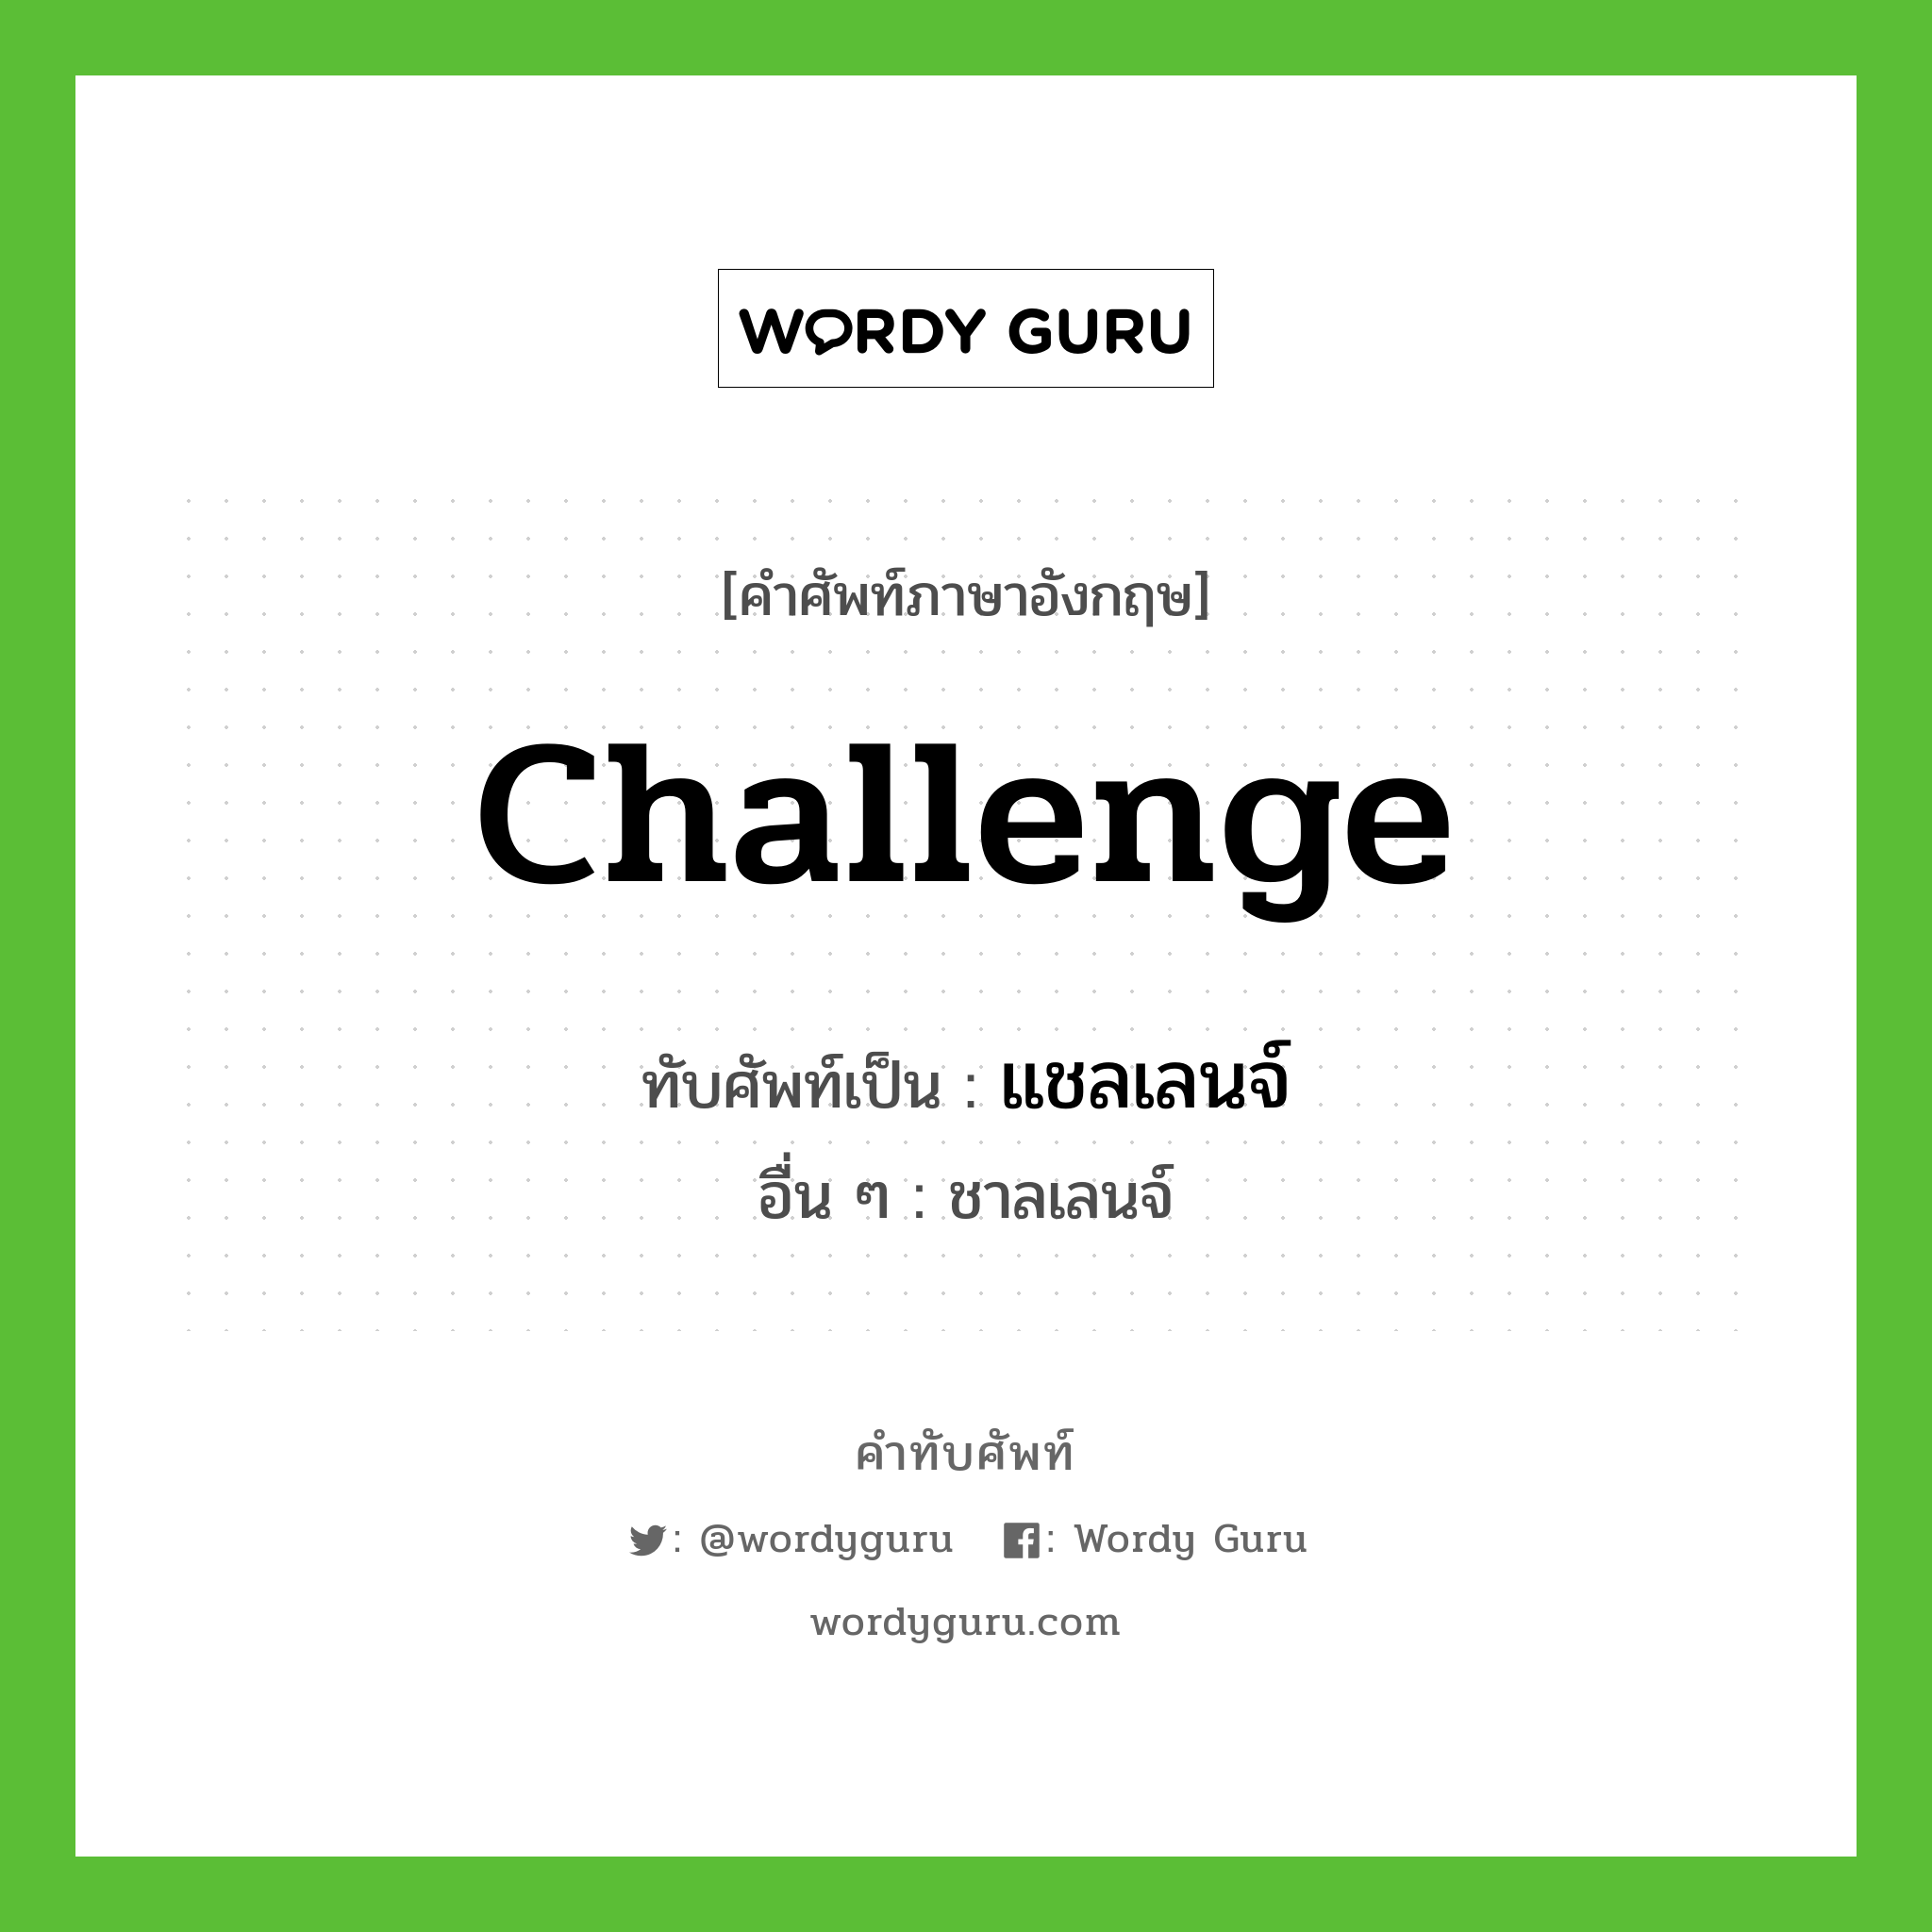 challenge เขียนเป็นคำไทยว่าอะไร?, คำศัพท์ภาษาอังกฤษ challenge ทับศัพท์เป็น แชลเลนจ์ อื่น ๆ ชาลเลนจ์